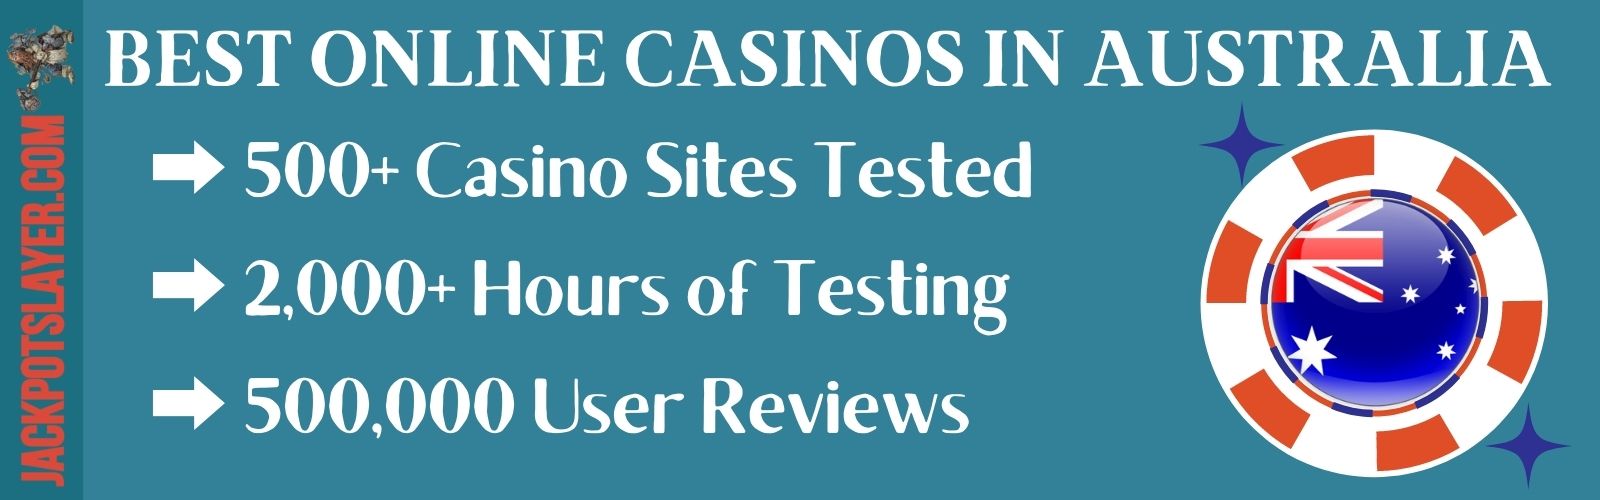 Best Online Casinos In Australia